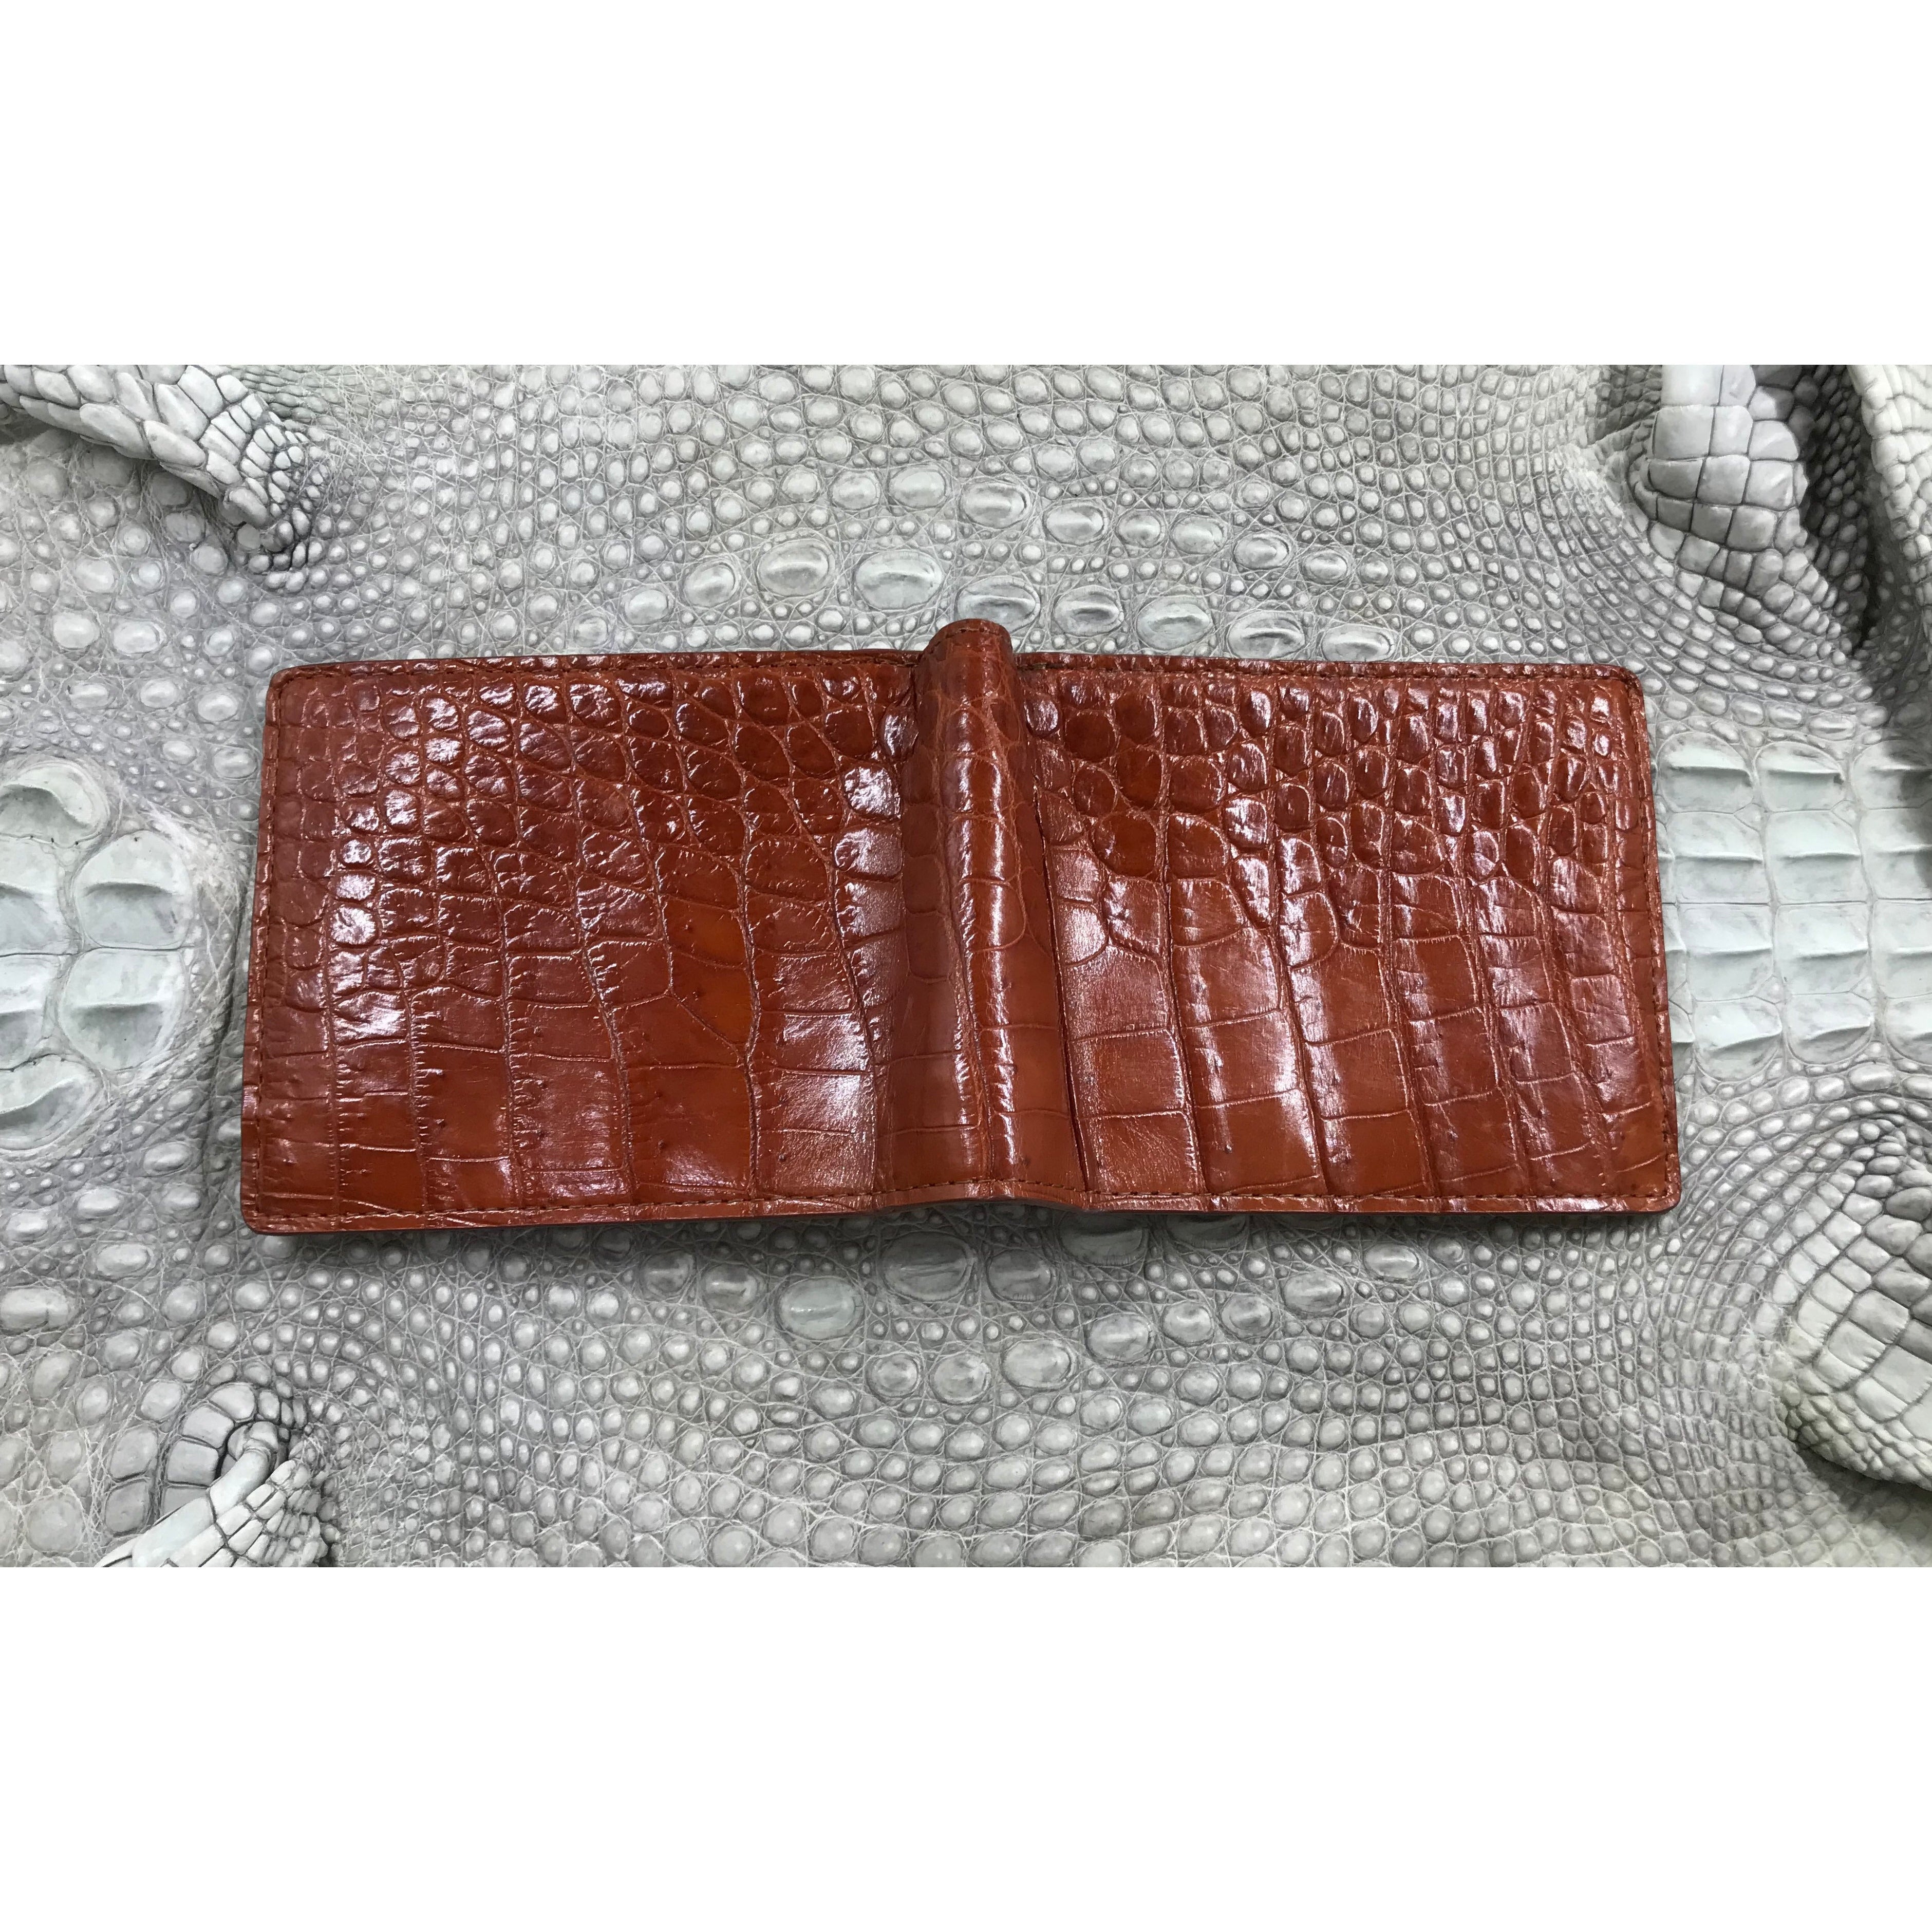 Brown Alligator Skin Bifold Wallet For Men | Handmade Crocodile Leather Wallet RFID Blocking | VL4524 - Vinacreations